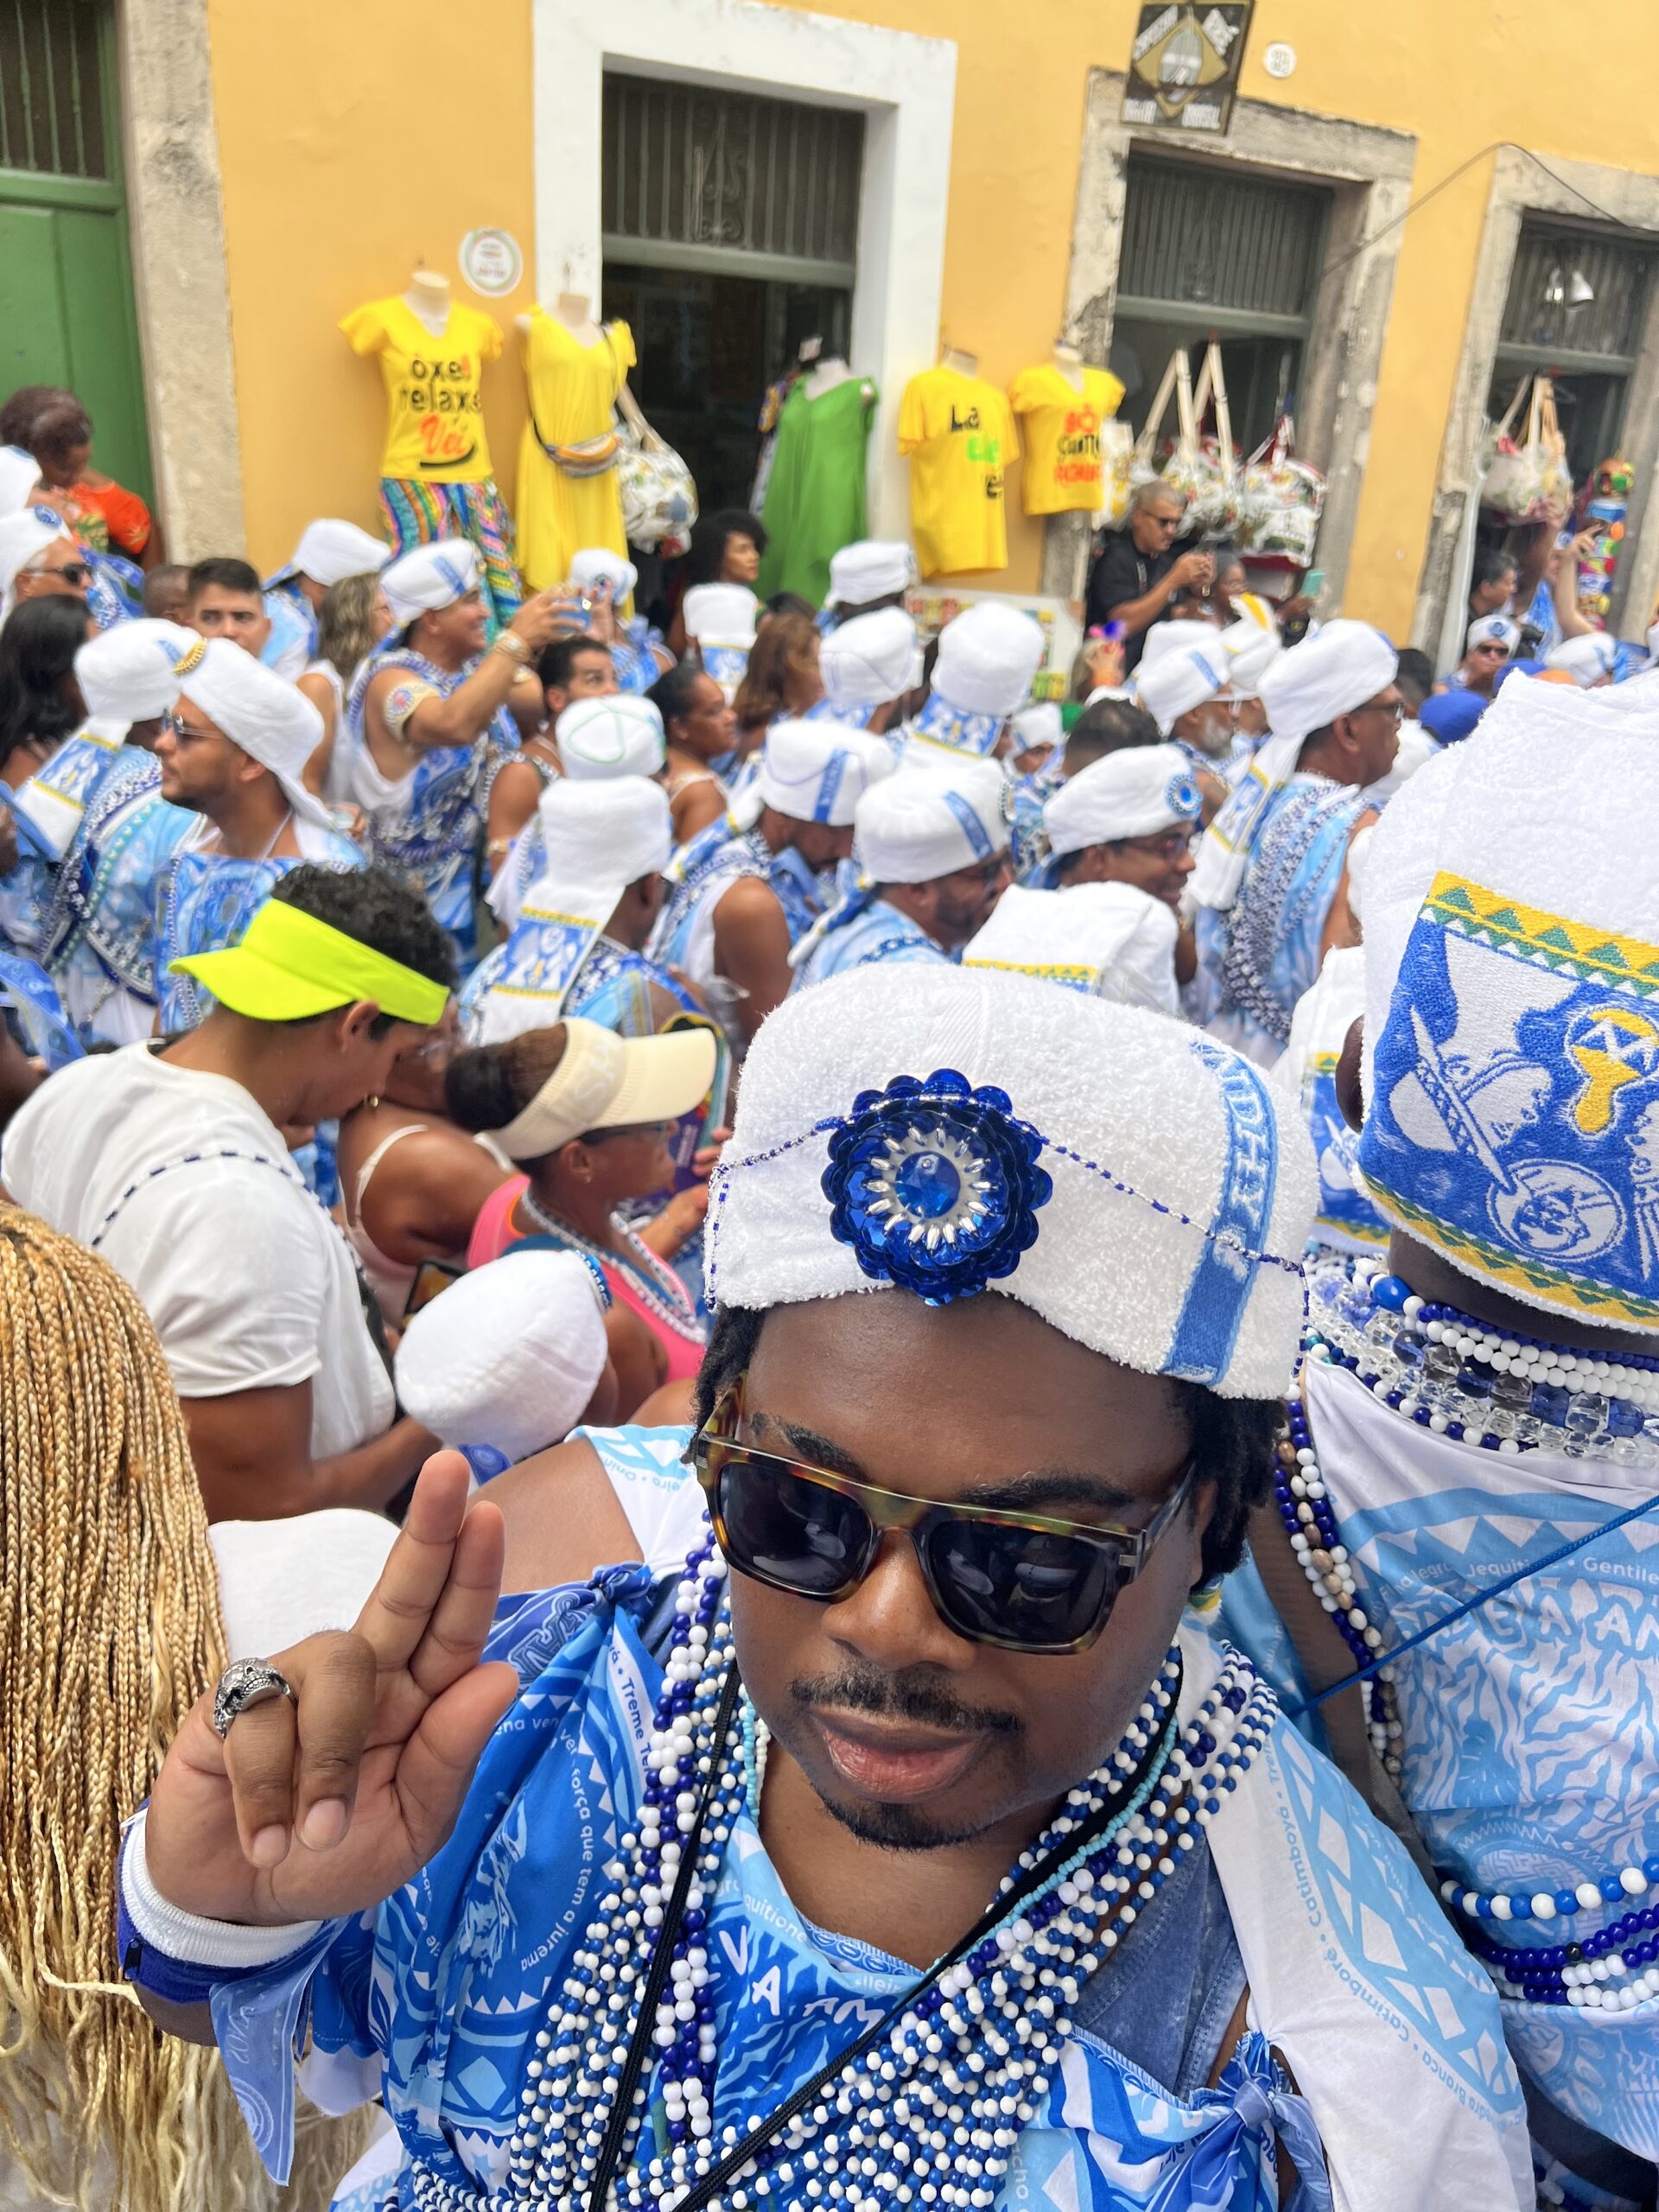 Salvador da Bahia: a Carnival tale with a not so happy ending